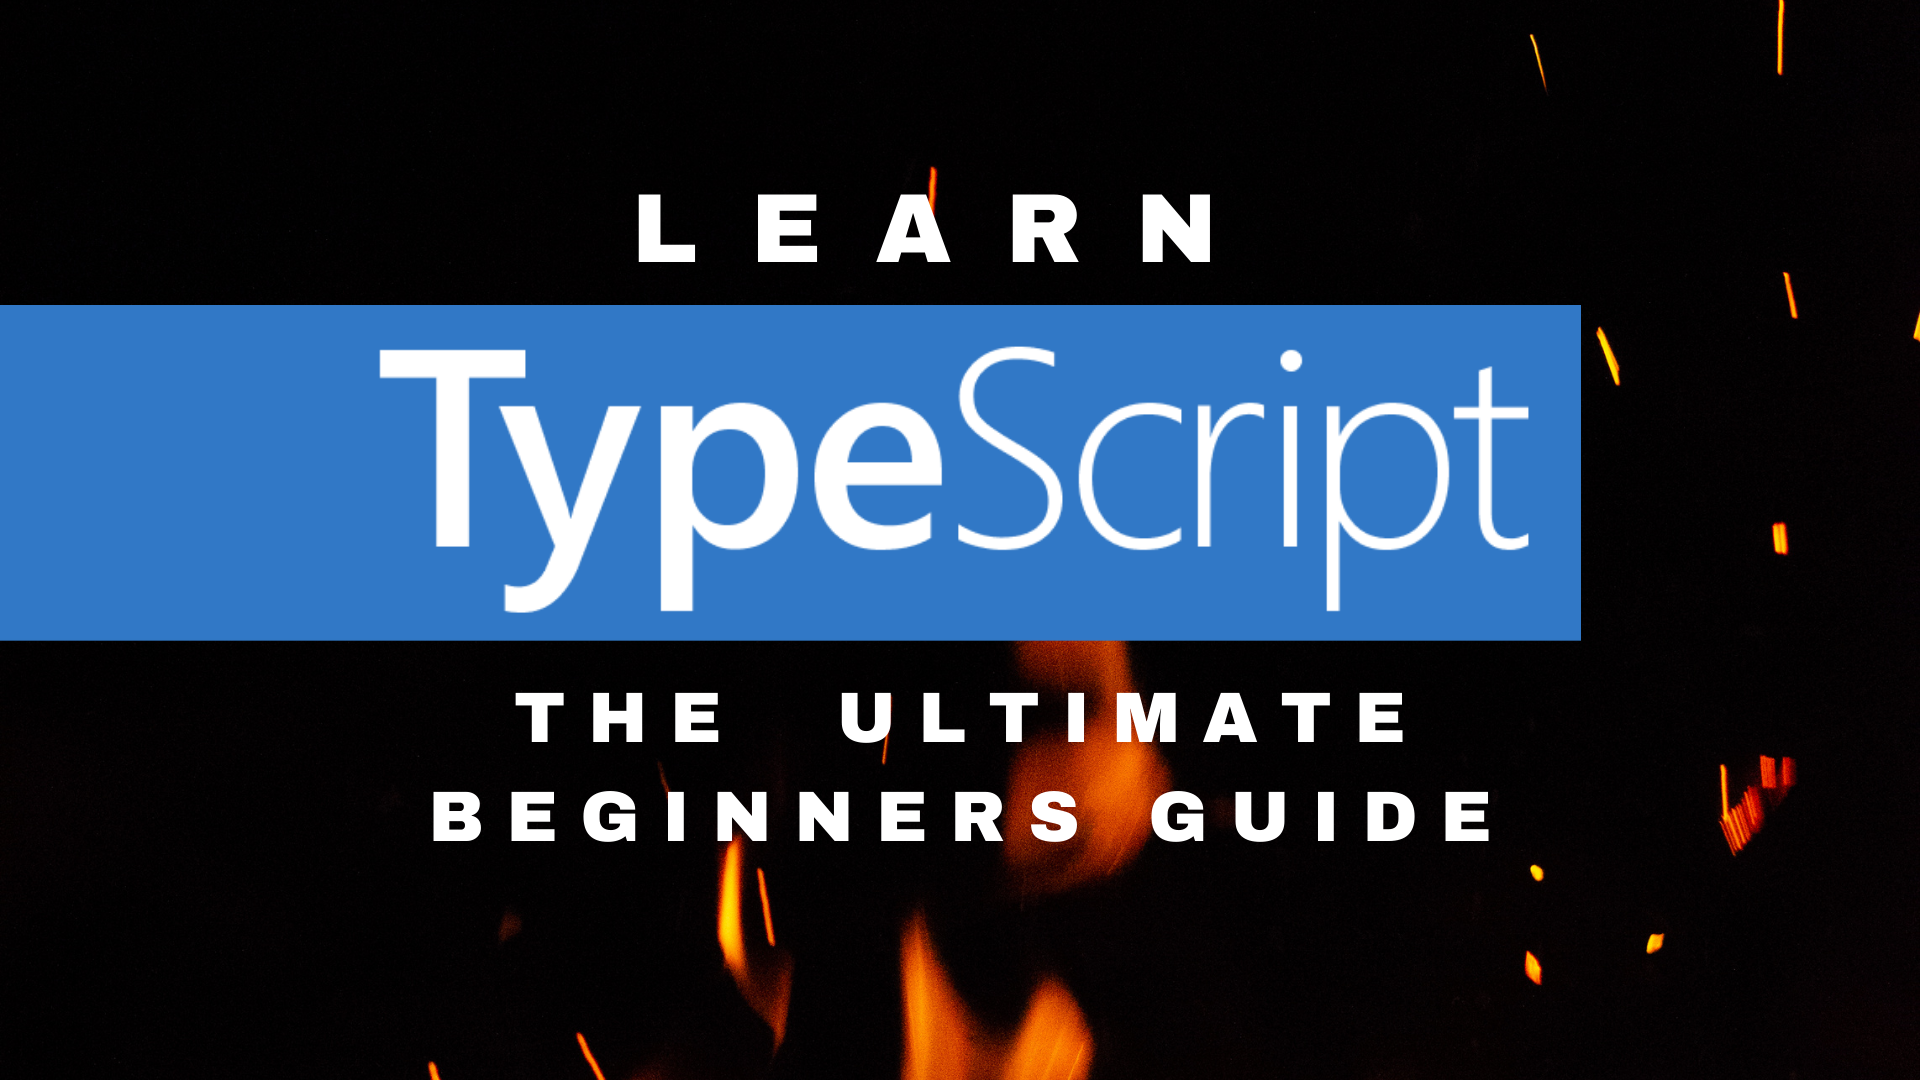 Learn TypeScript – The Ultimate Beginners Guide